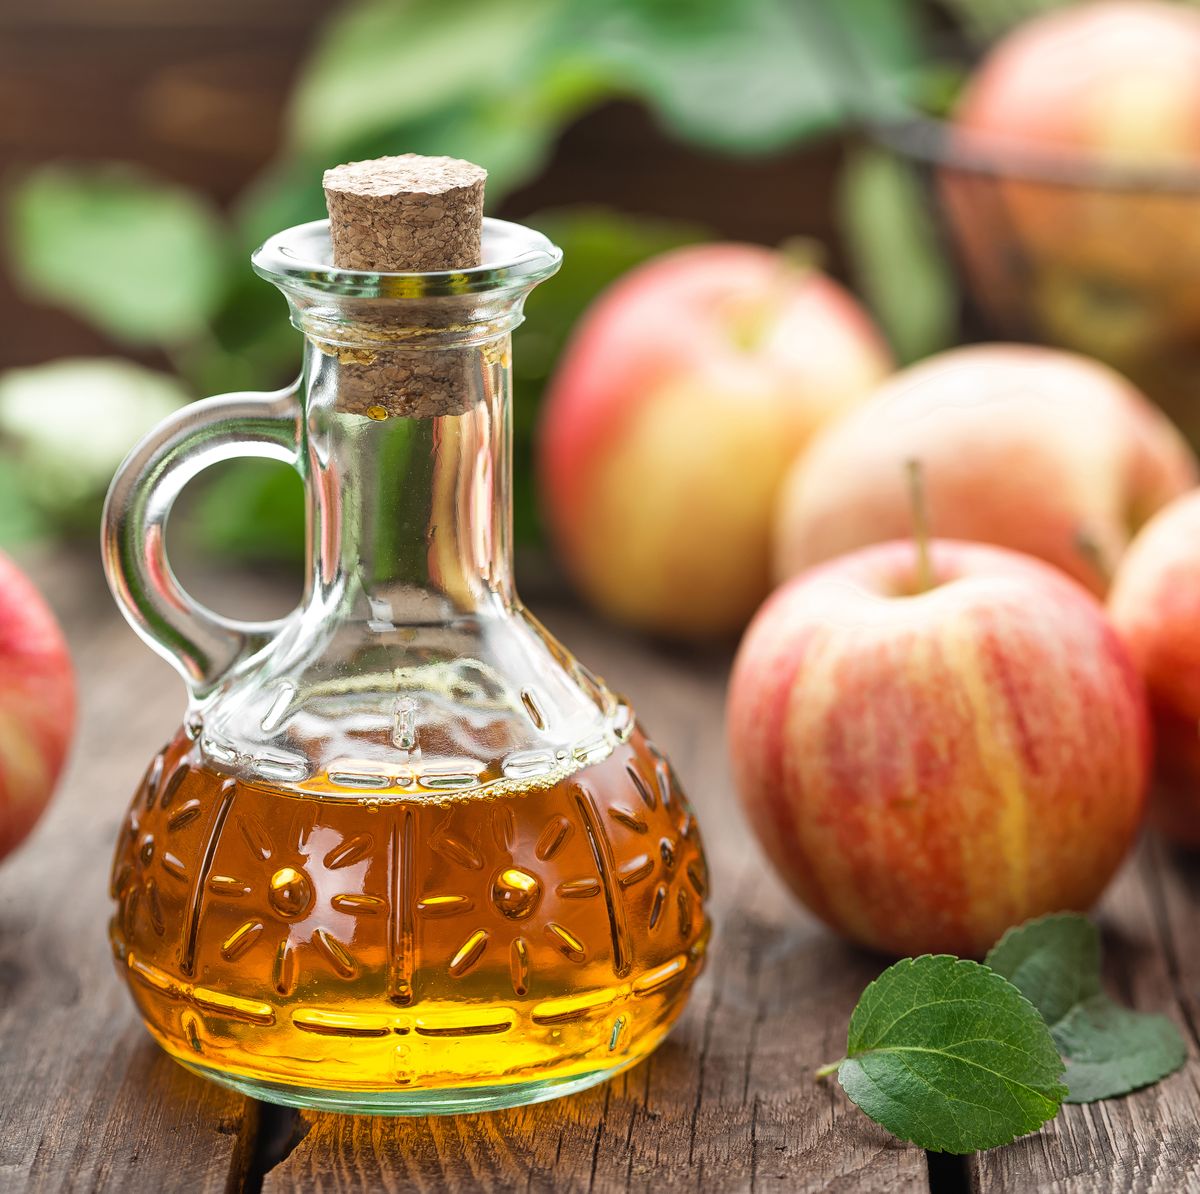 7 Best Apple Cider Vinegars, Ranked